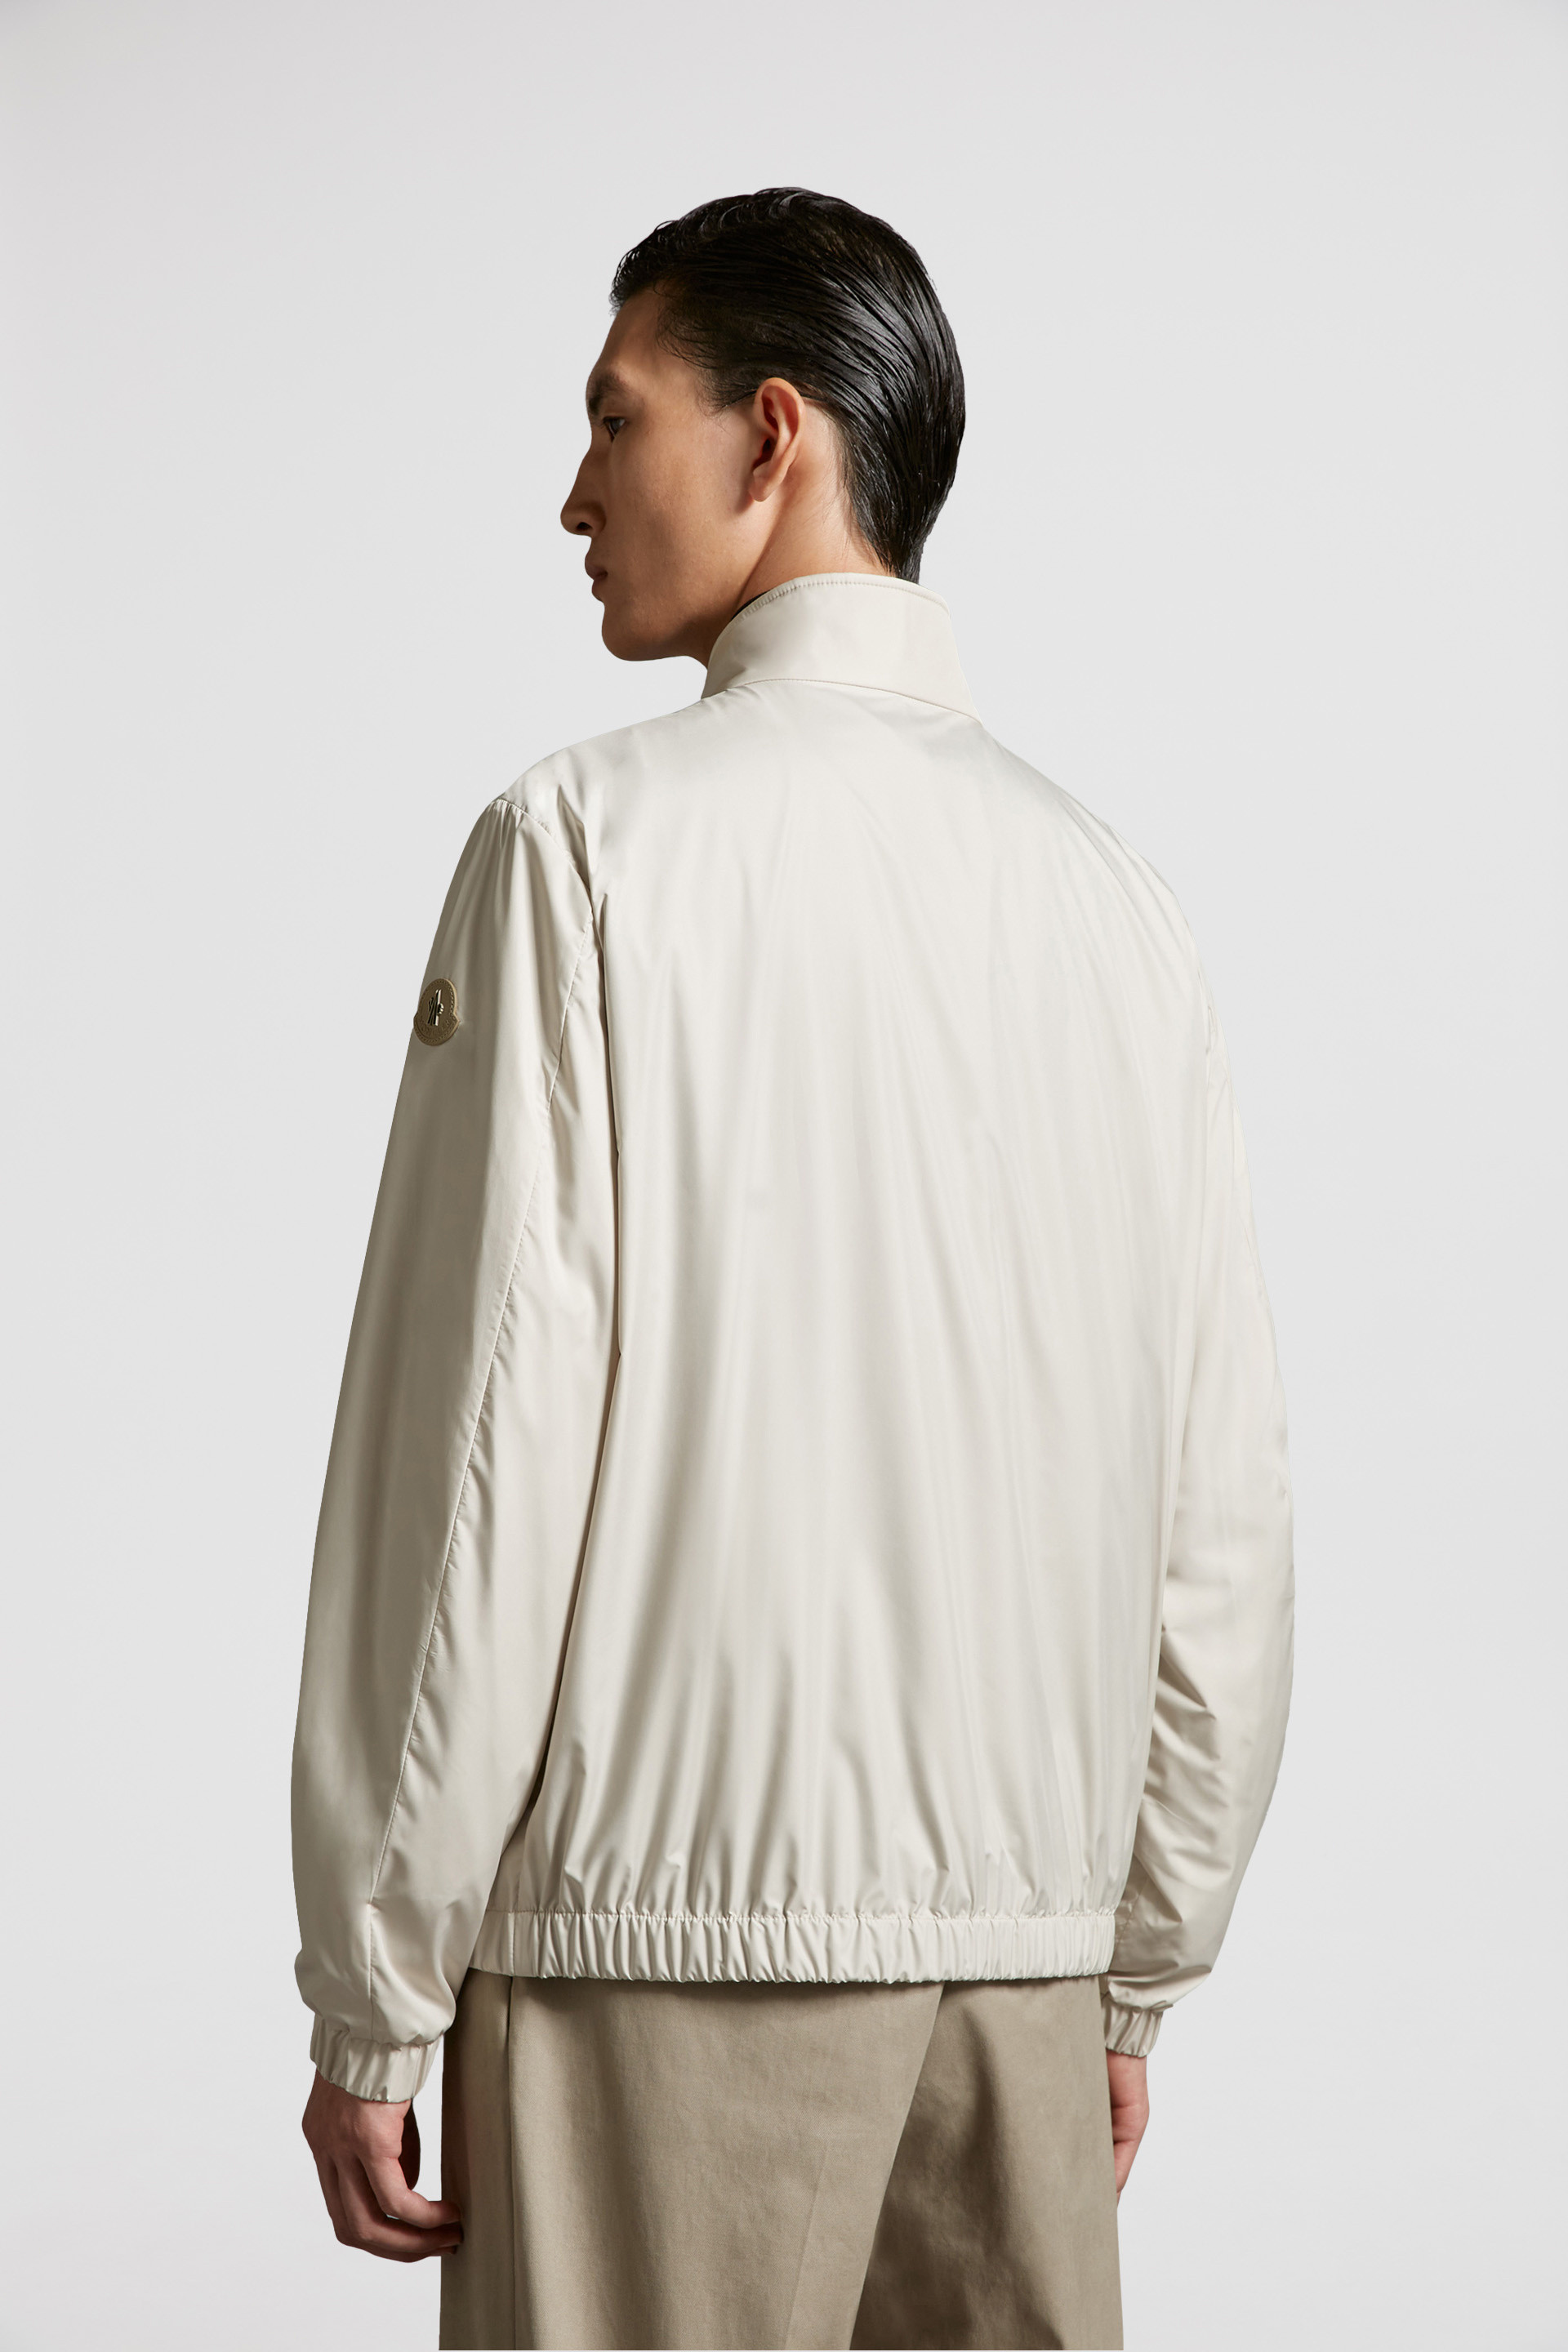 Windbreakers & Raincoats for Men - Outerwear | Moncler JP